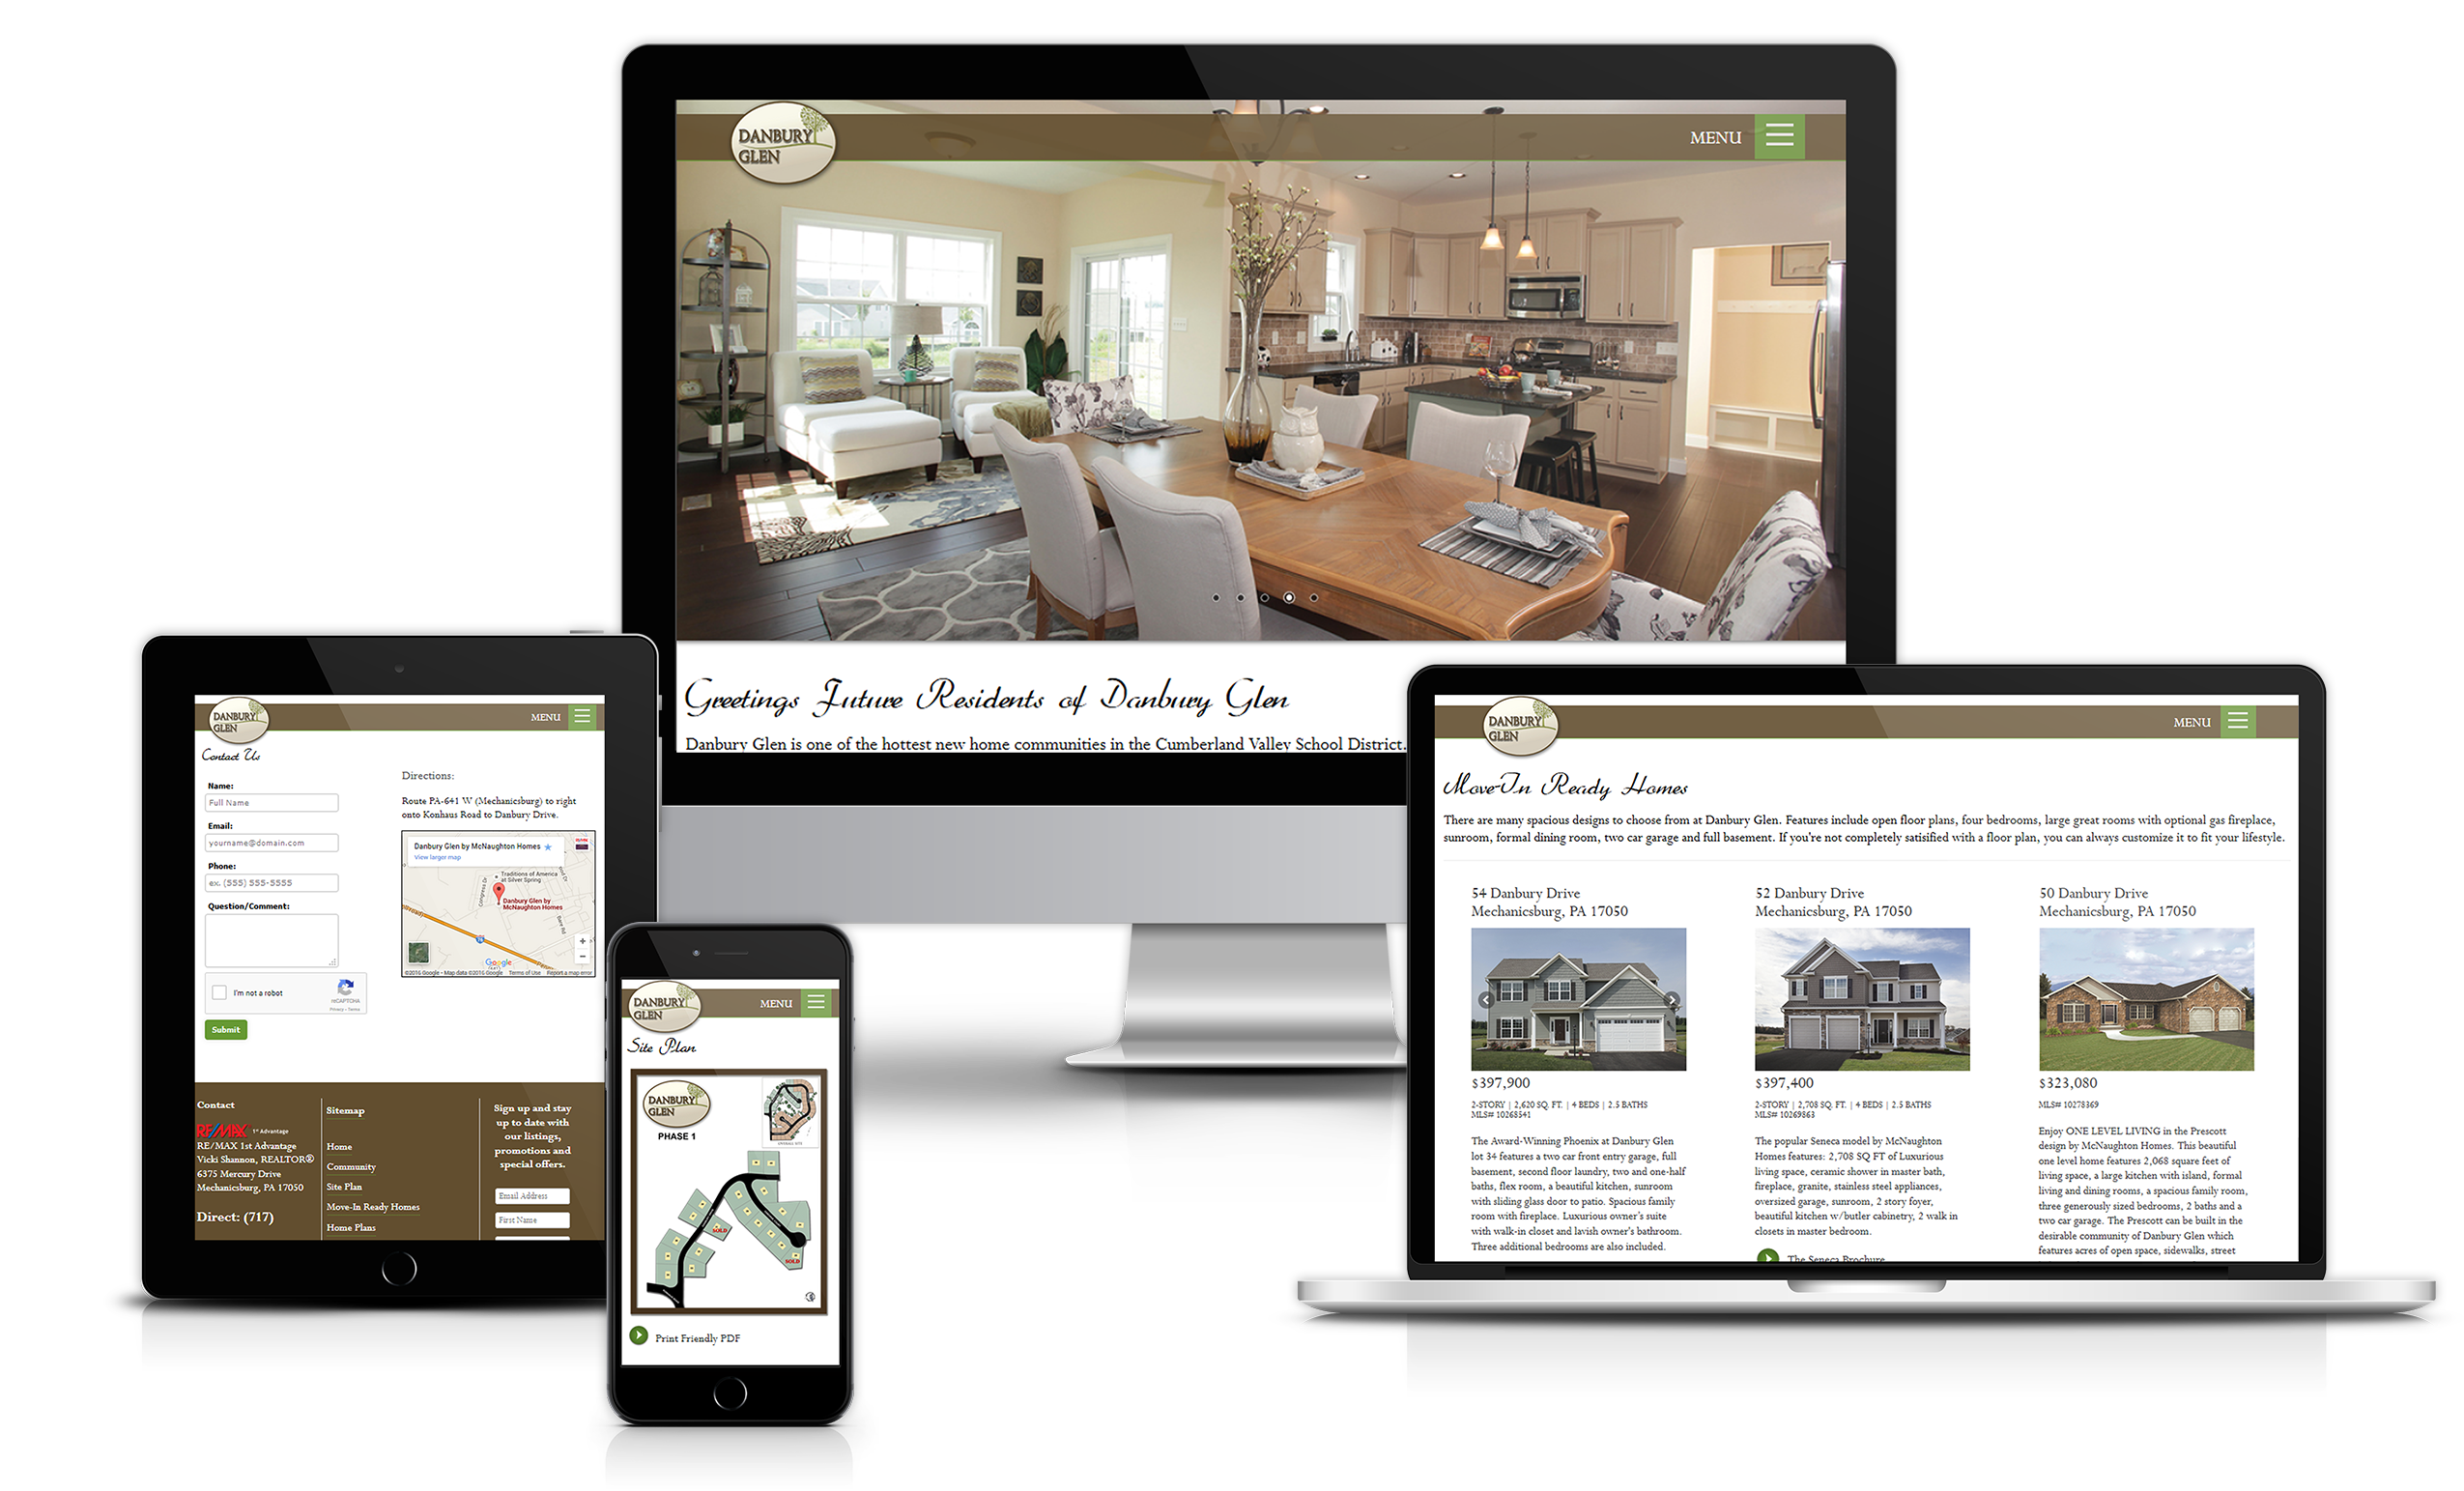 Danbury Glen website design, mechanicsburg pa home builder - HeadAche Designs